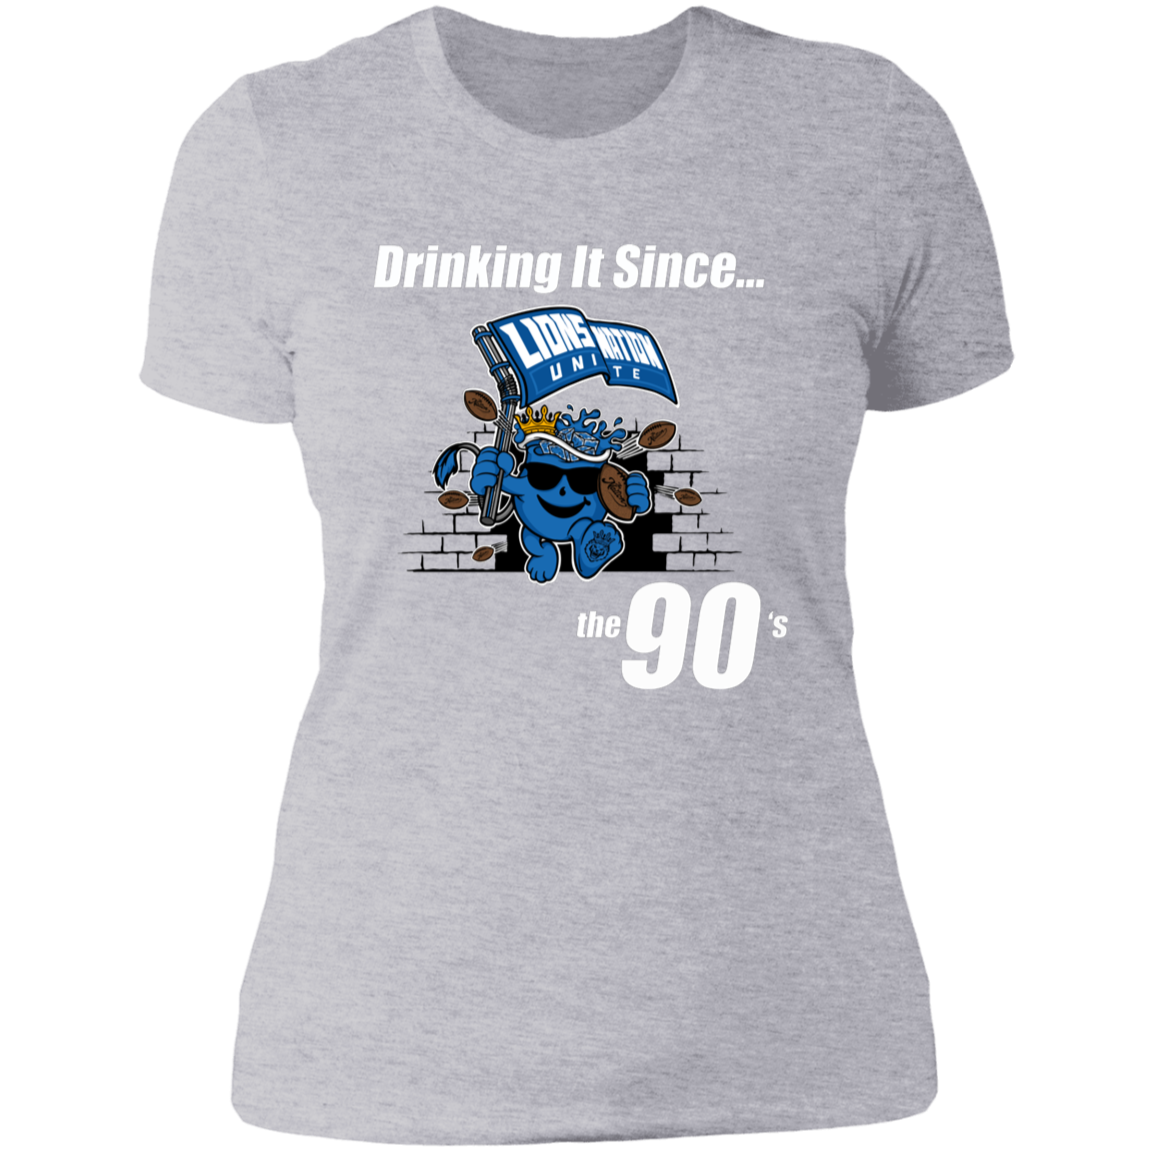 Drinking It Since the 90's Women's T-Shirt